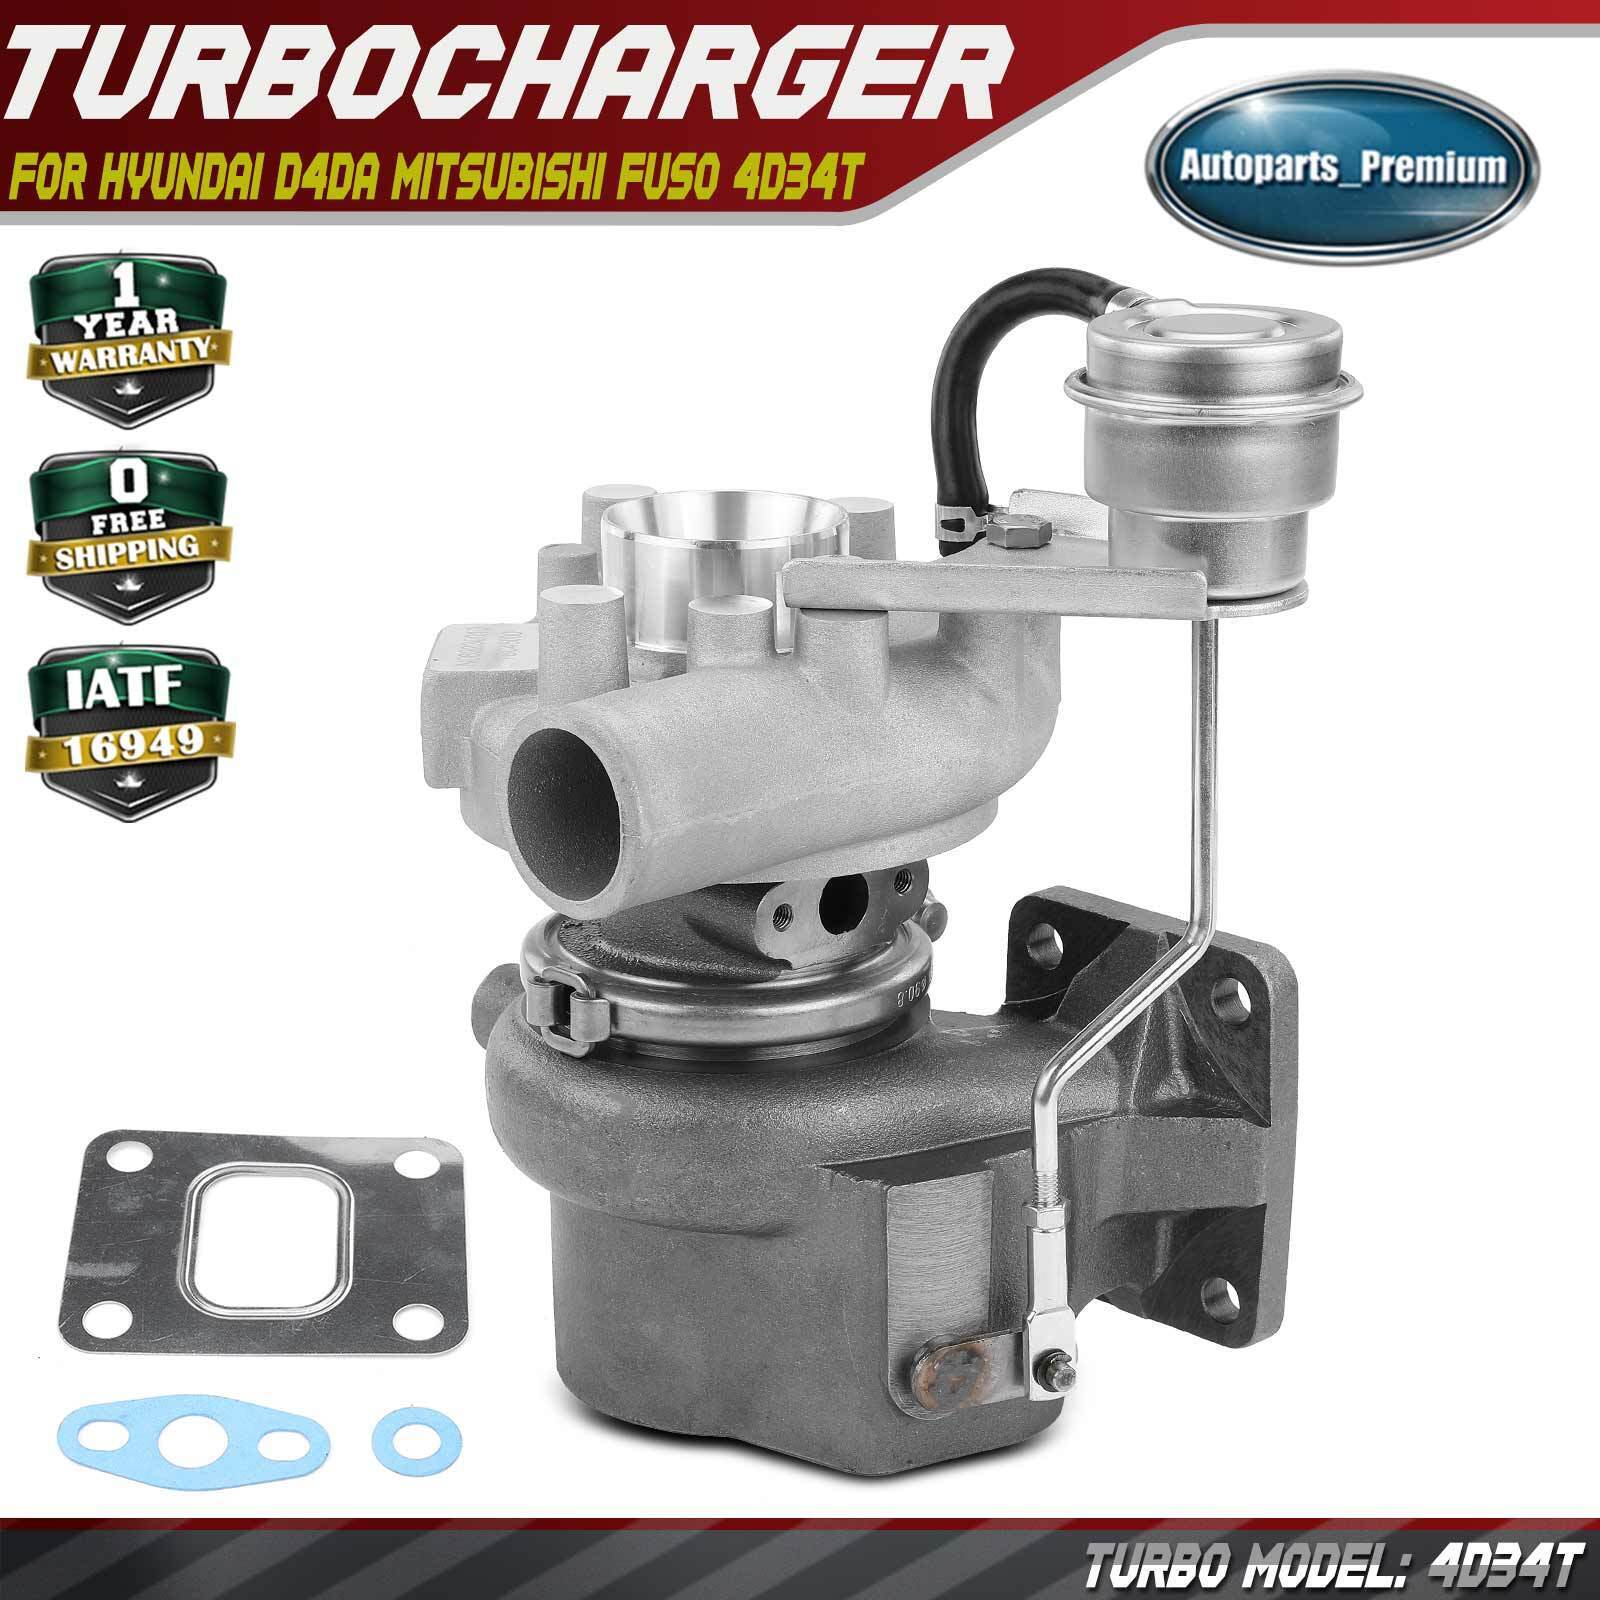 Turbo Turbocharger for Hyundai D4DA Mitsubishi Fuso 4D34T 136HP 3.9L 28230-45000